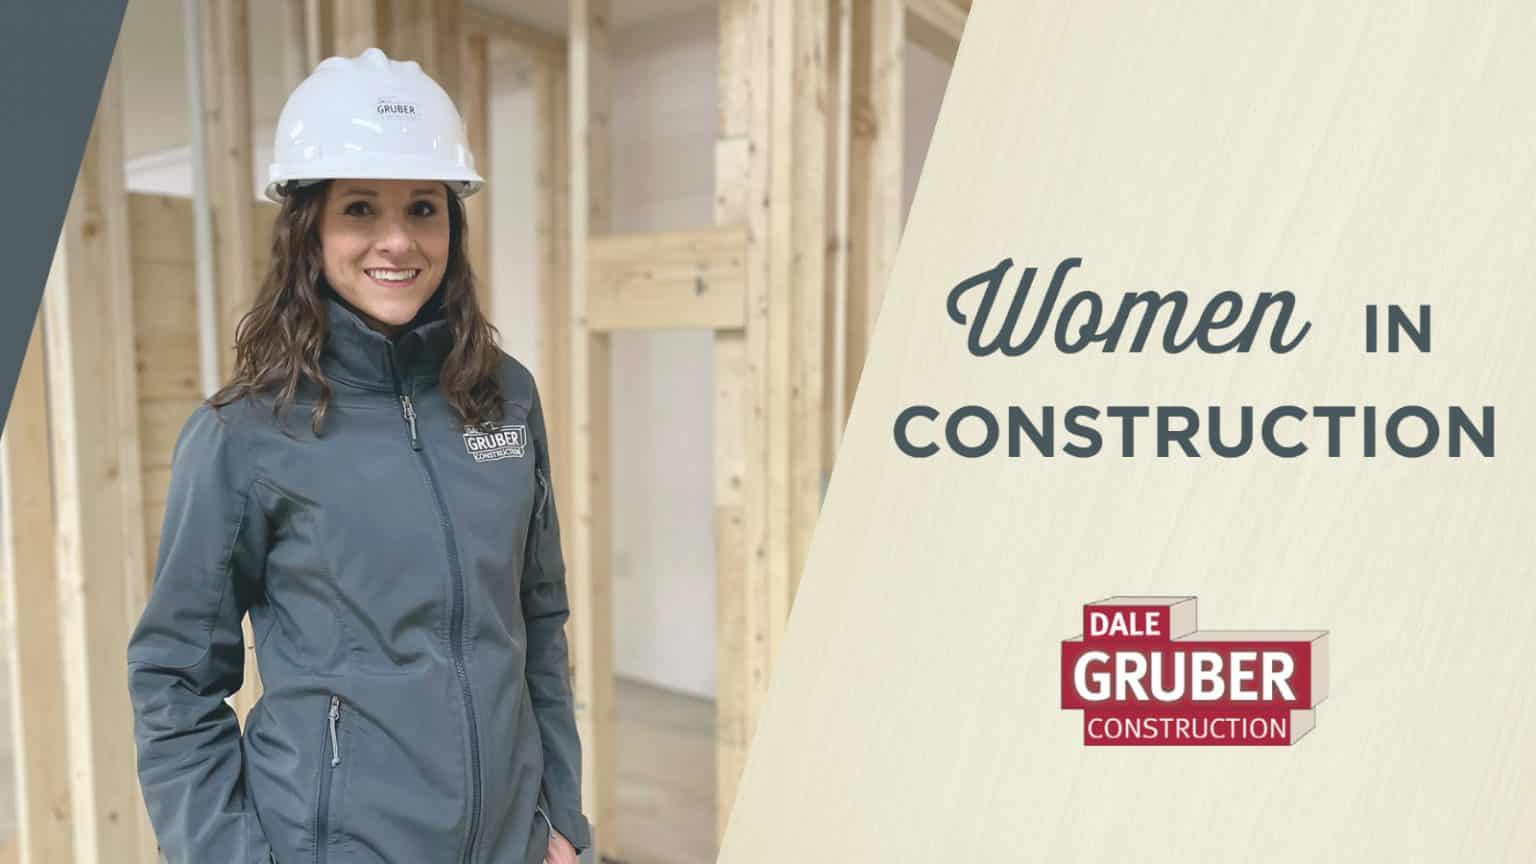 DGC Celebrates Women in Construction Week!